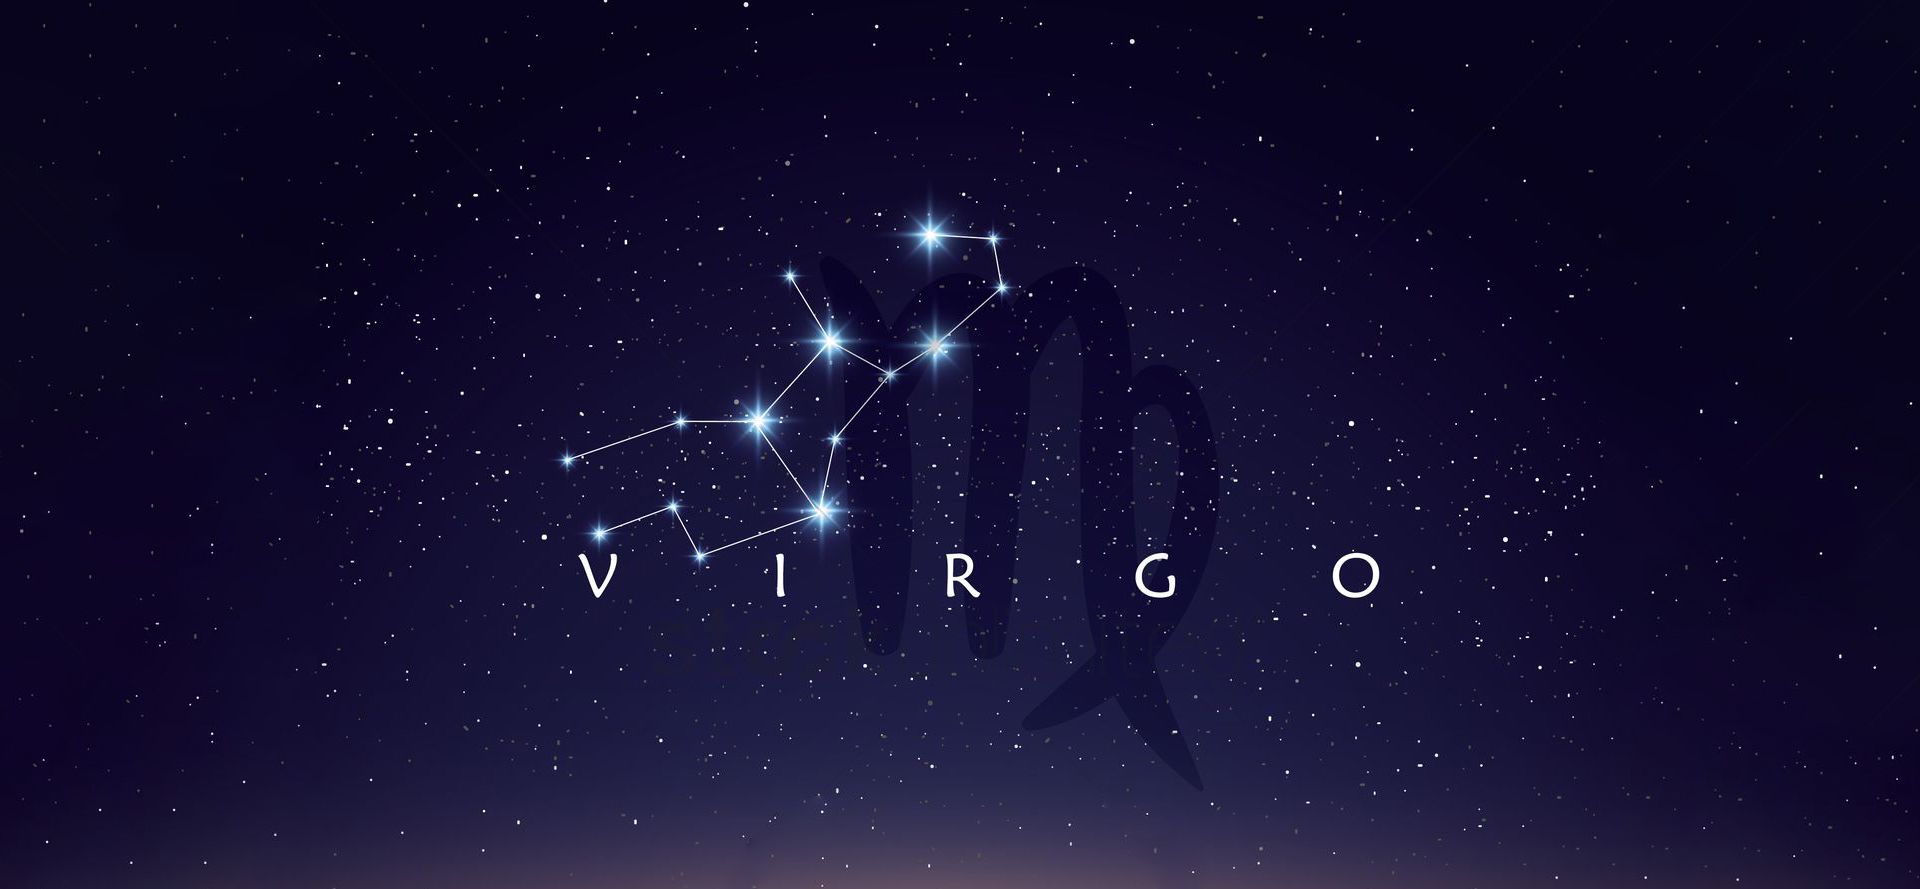 Virgo constellation.